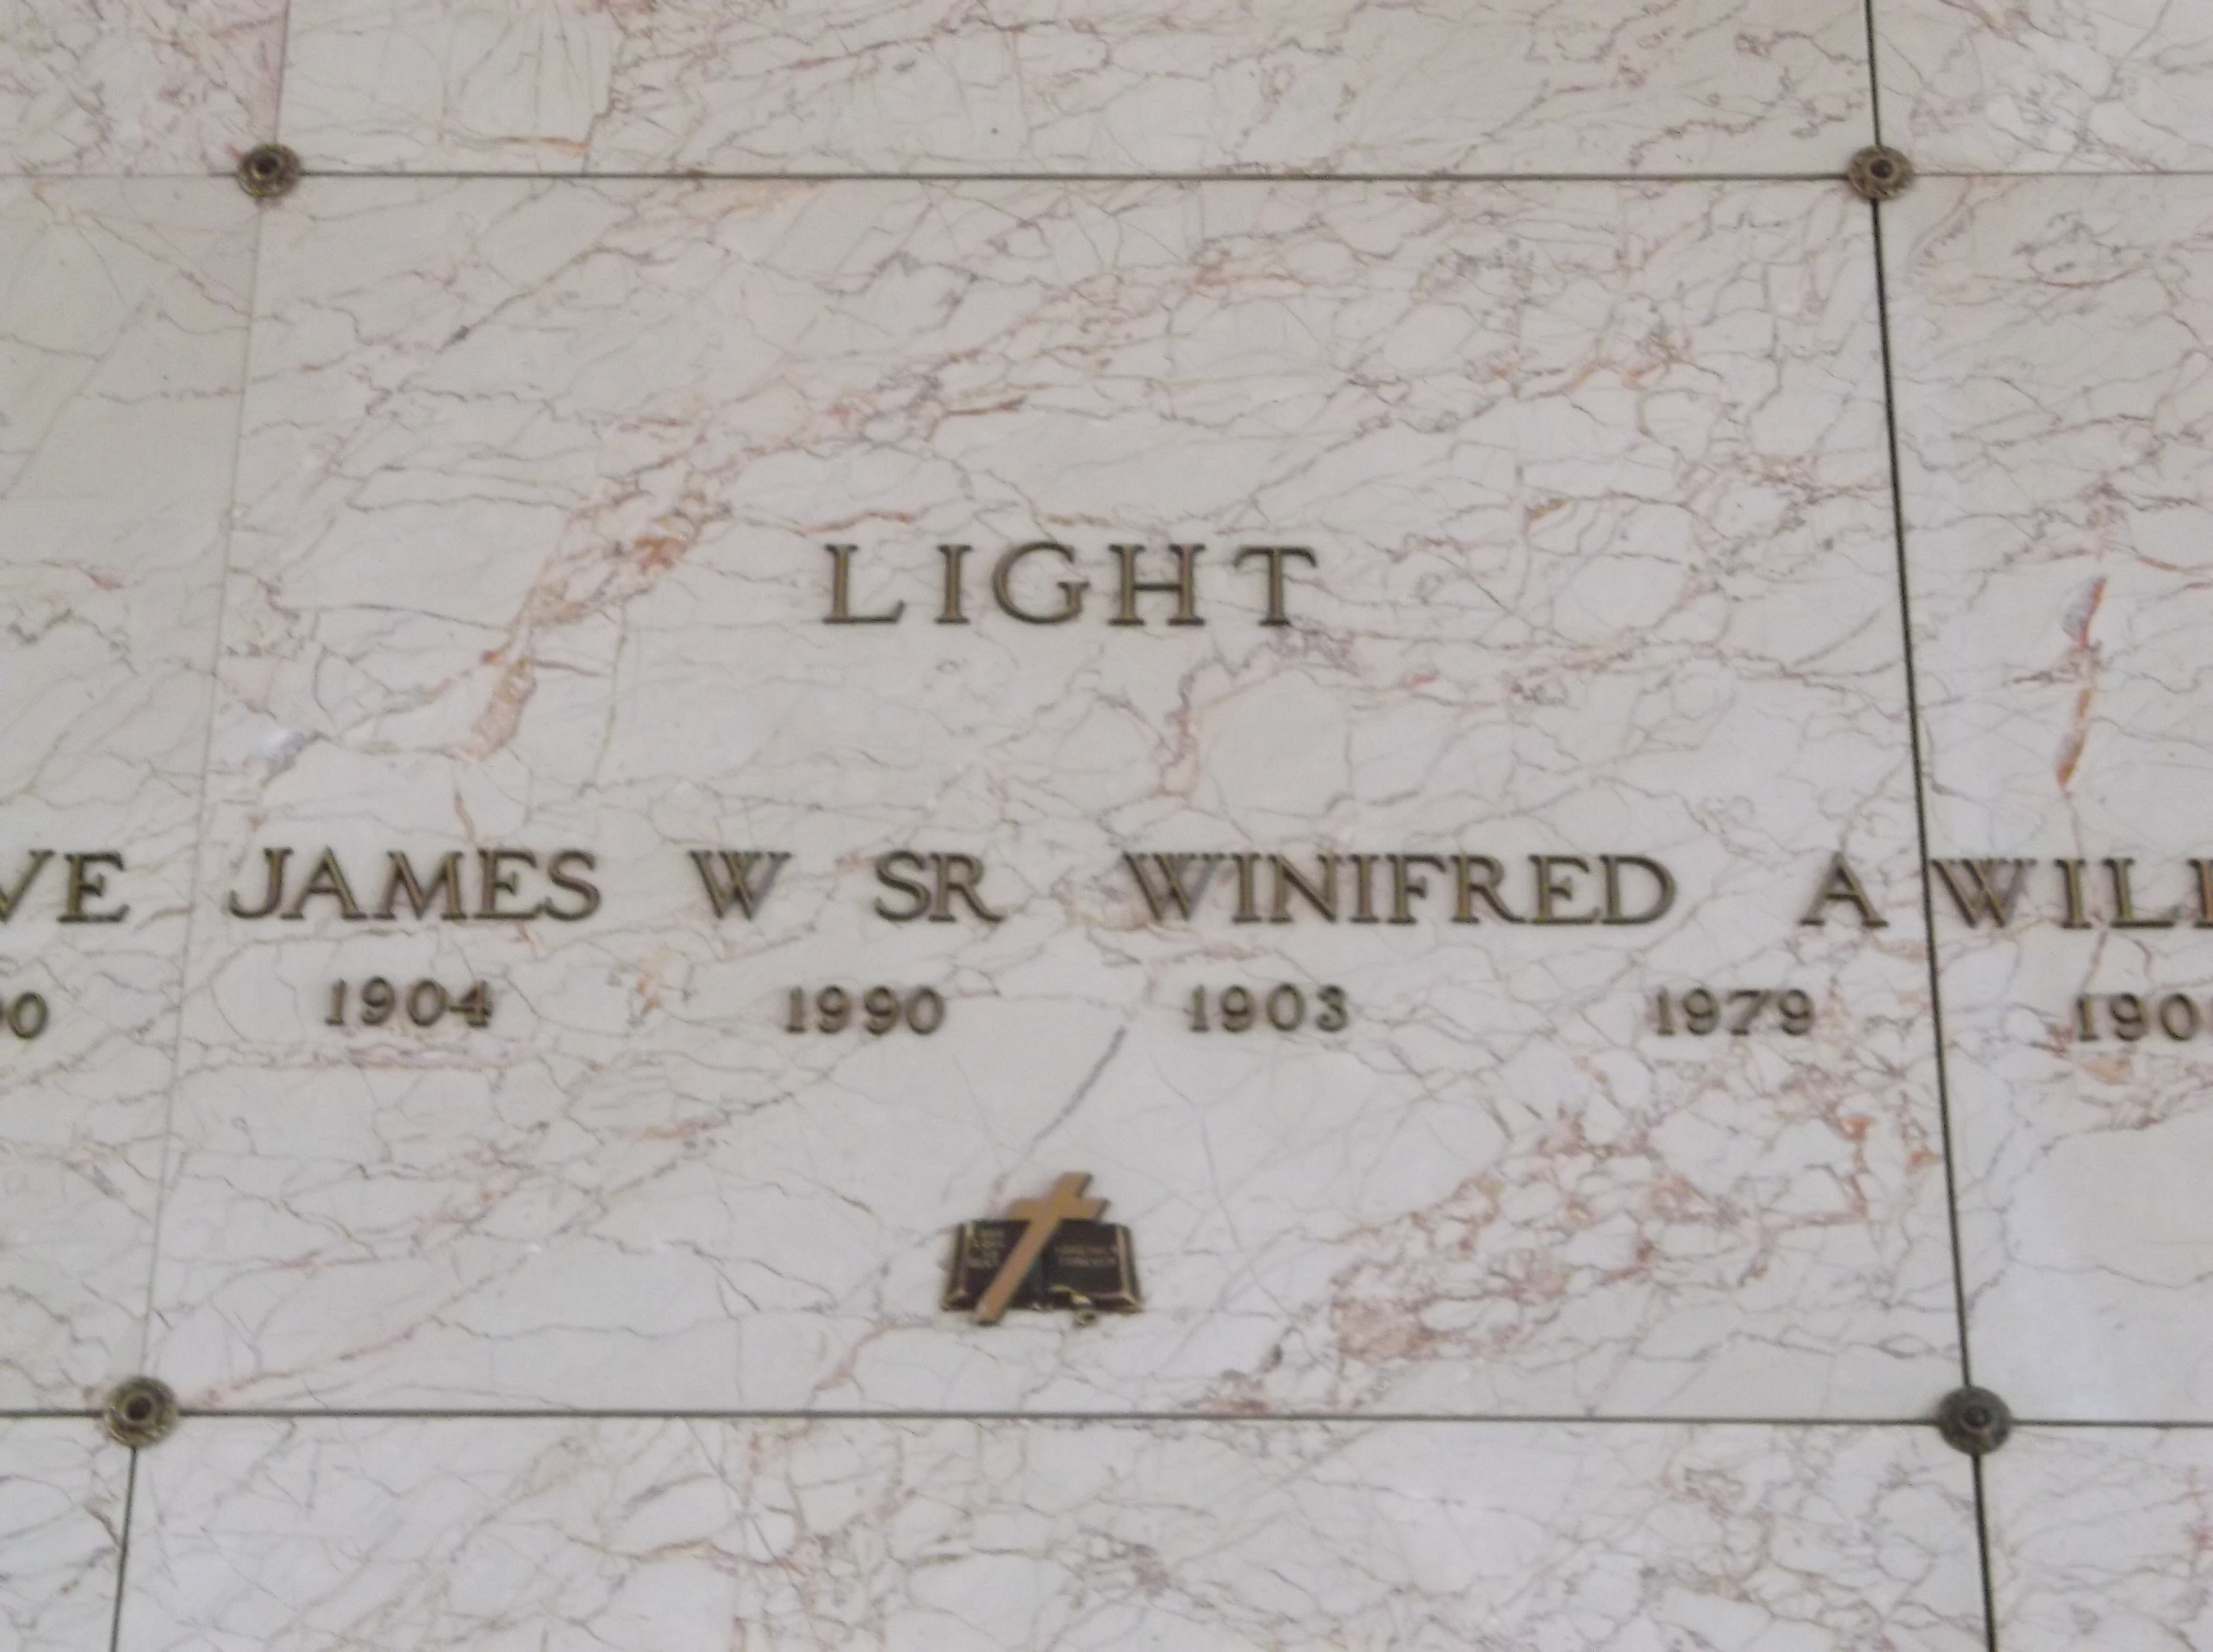 James W Light, Sr